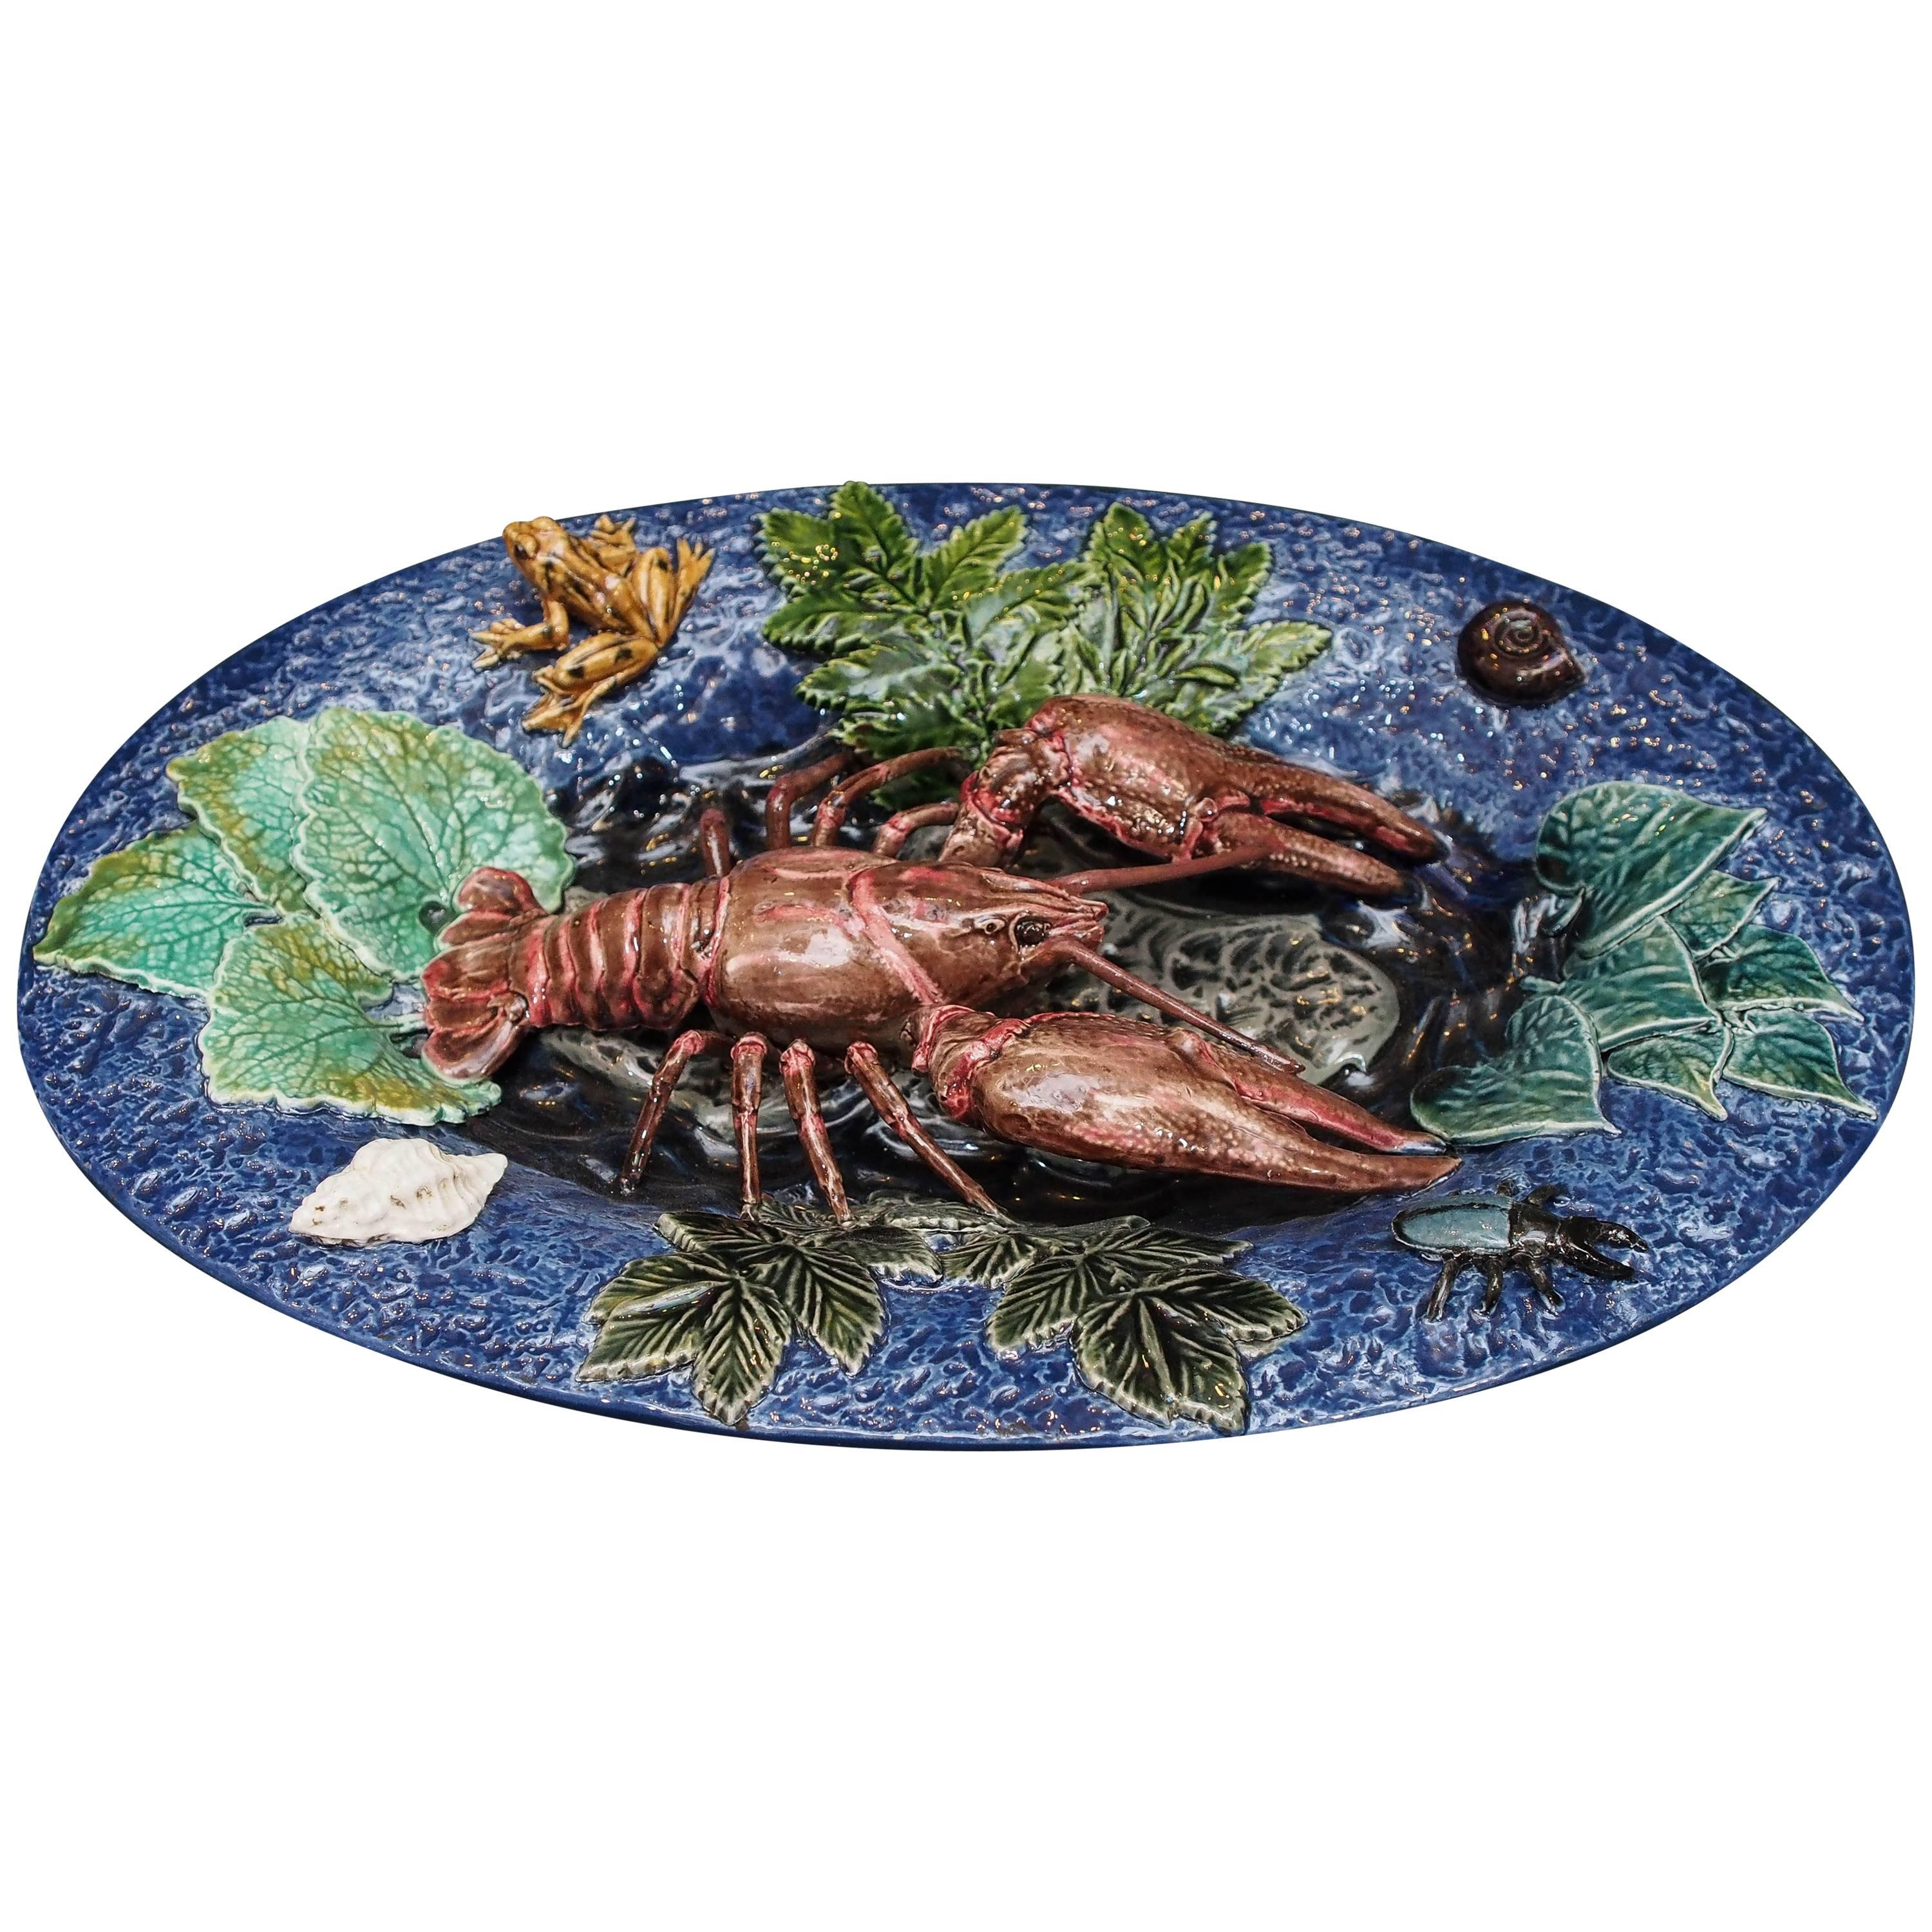 Portuguese Pallisy Platter with Langoustine and Frog